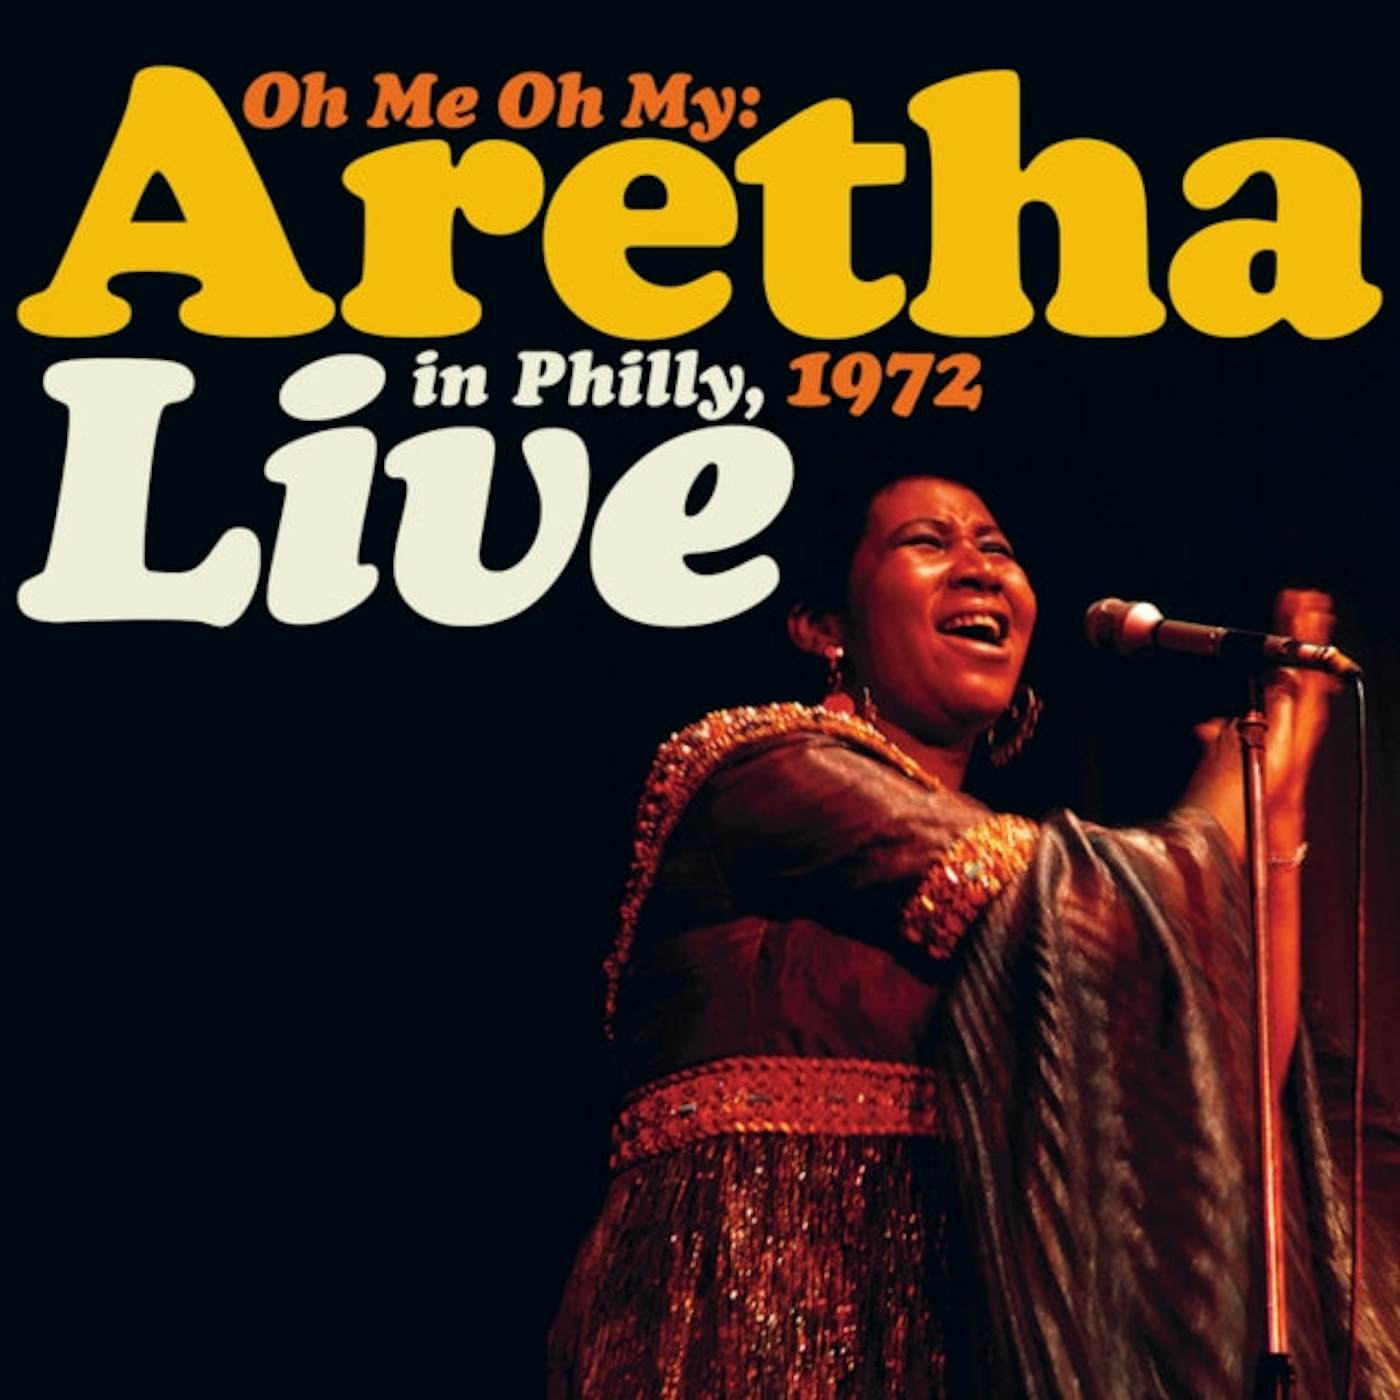  Aretha Franklin LP - Rsd 2021 - Oh Me Oh My Aretha (Vinyl)